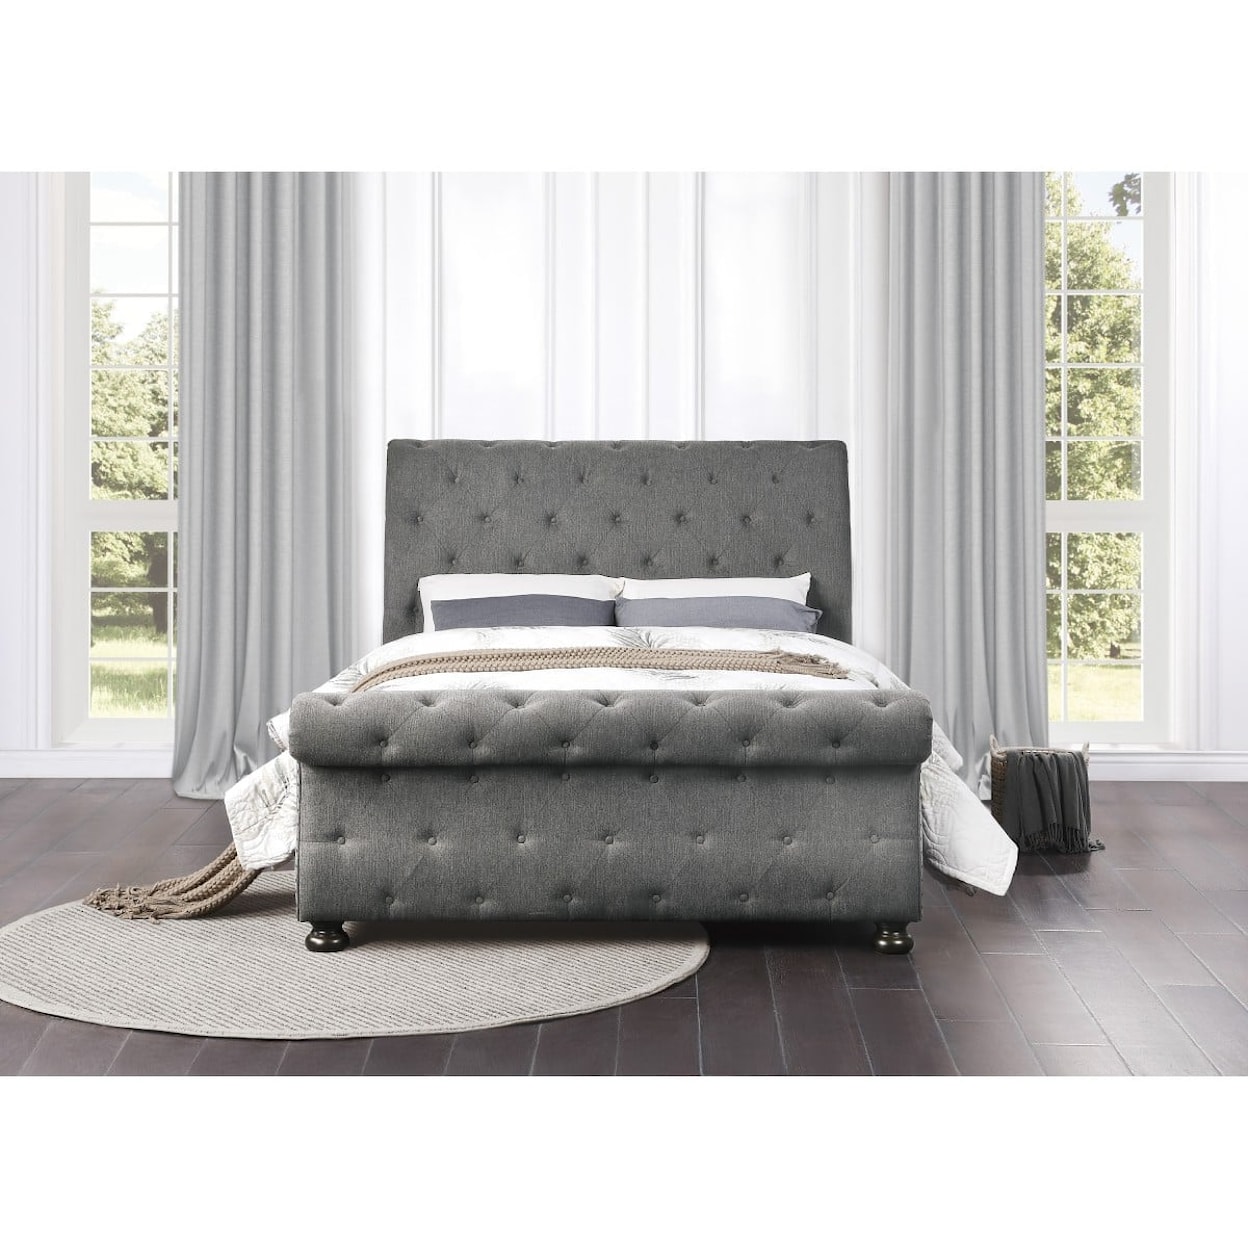 Homelegance Furniture Crofton Full Bed